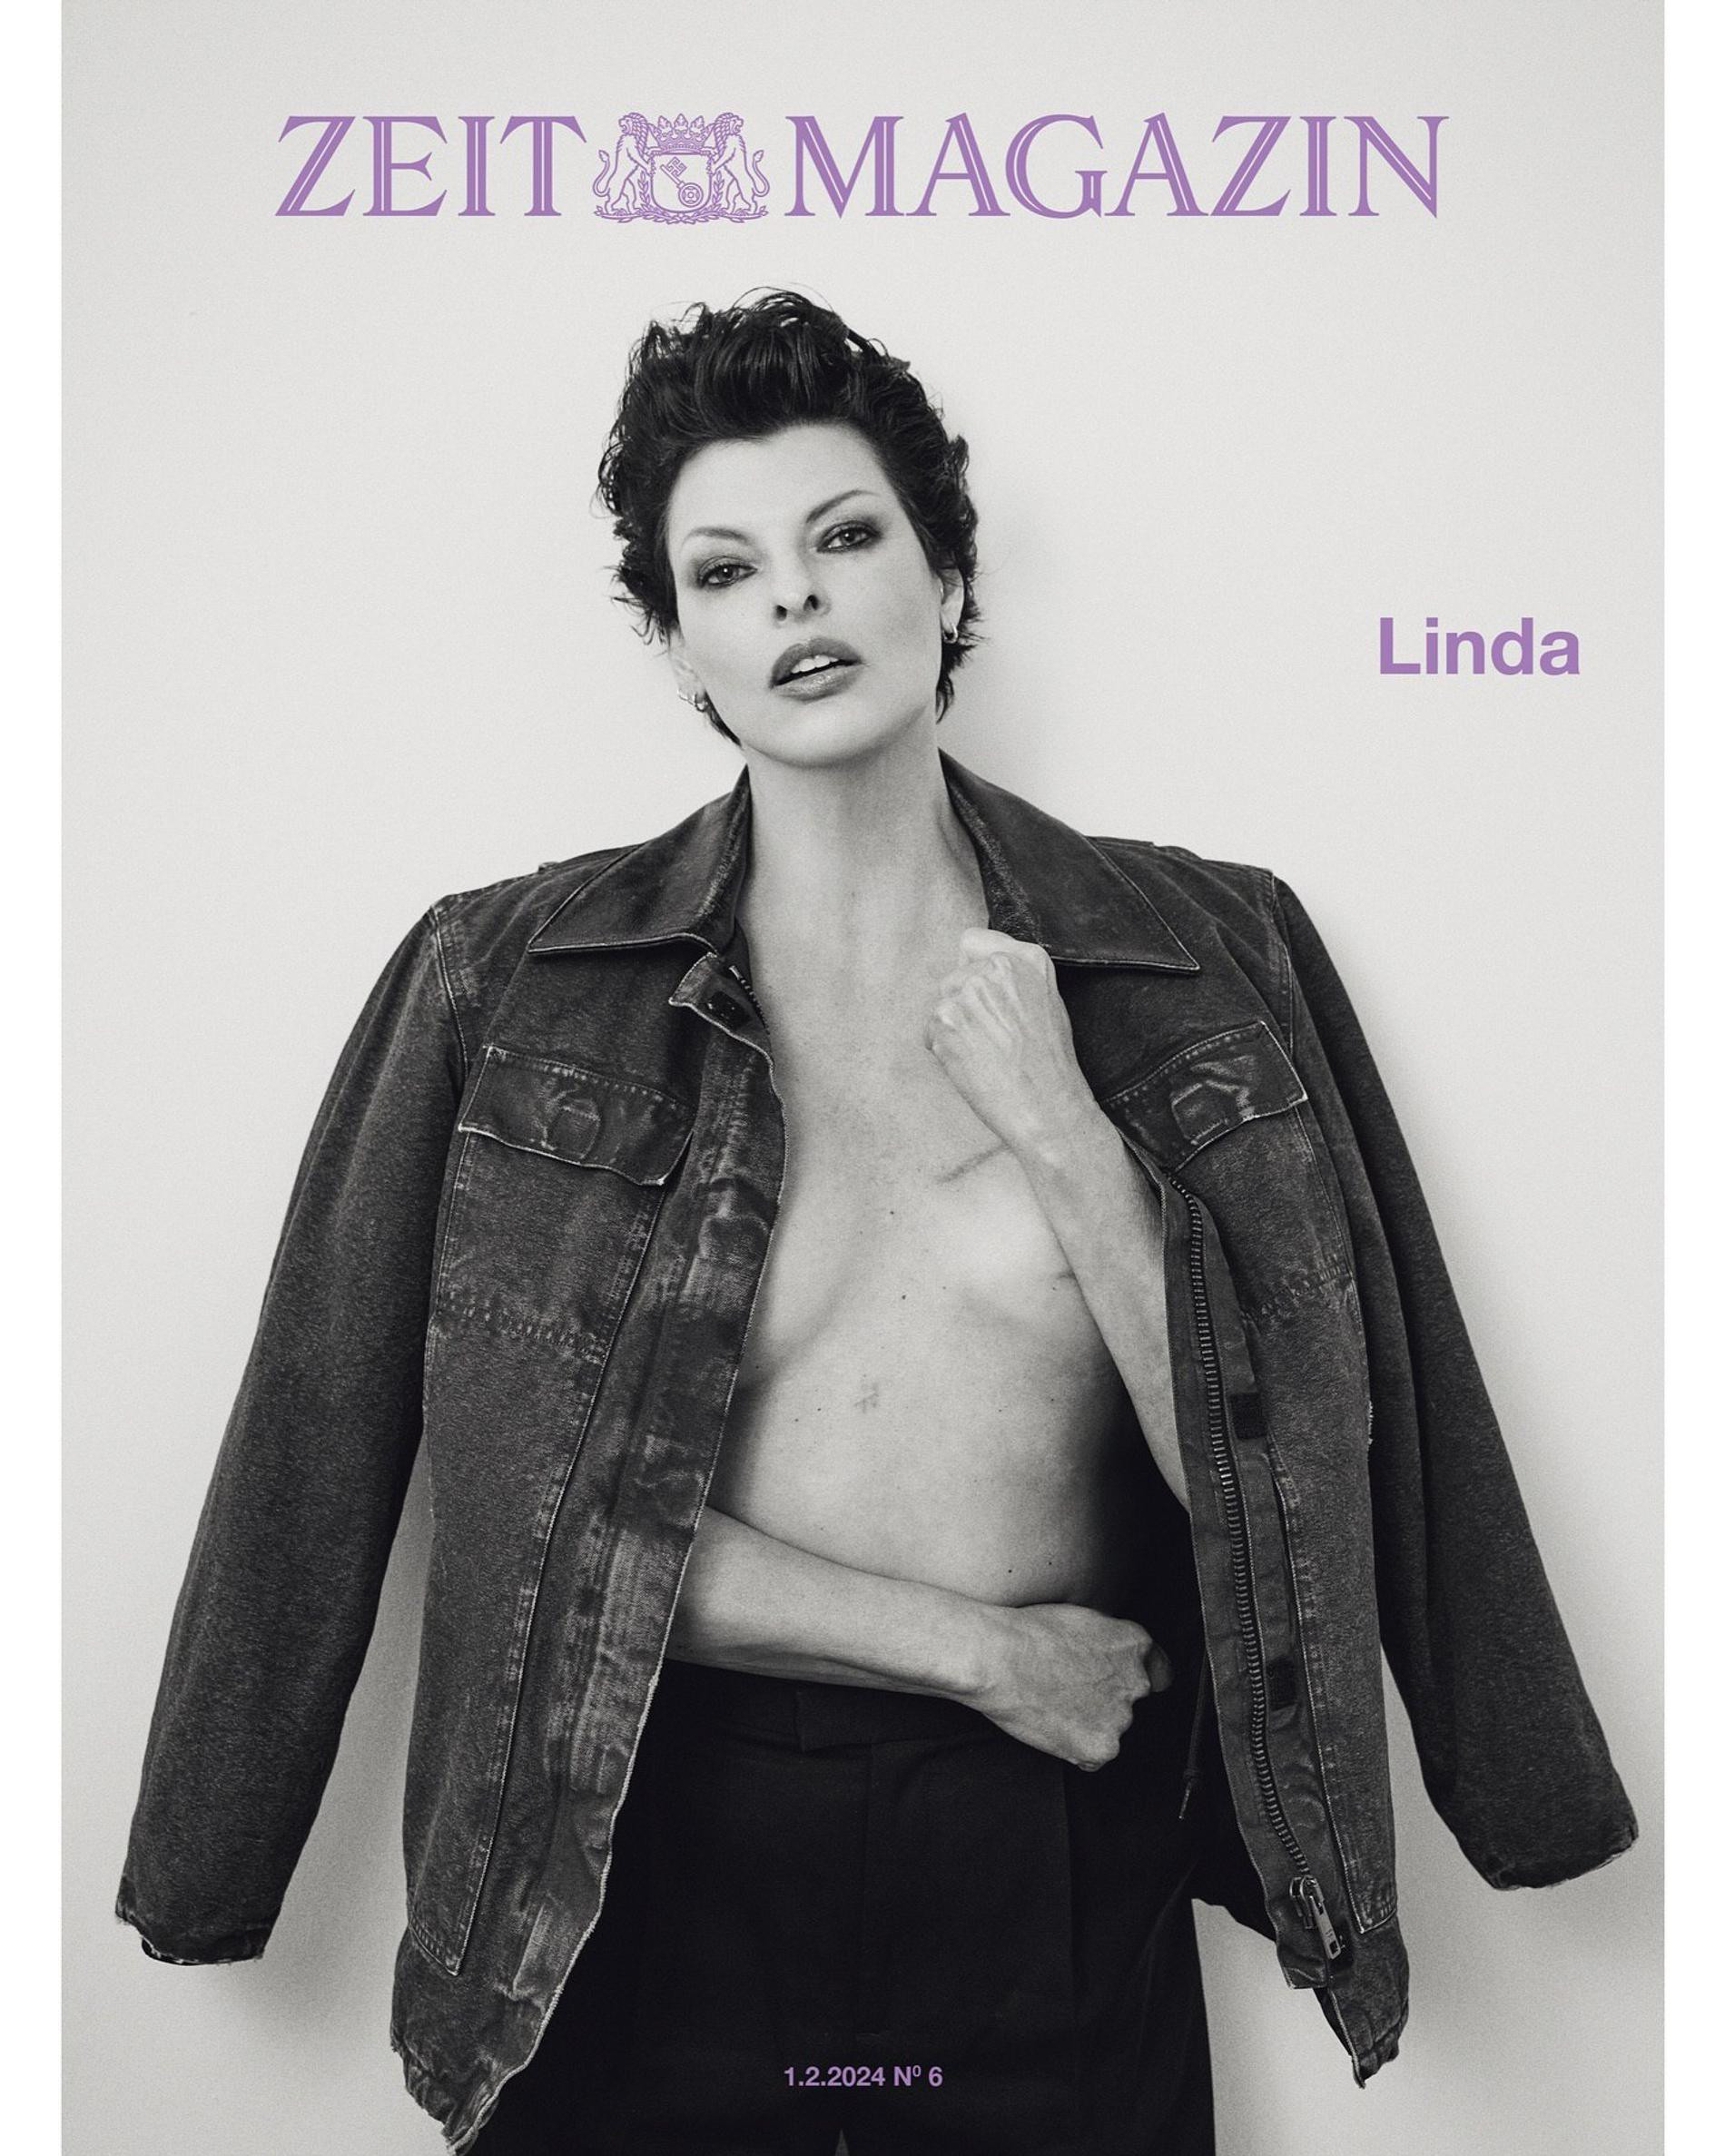 Линда Евангелиста на обложке Zeit Magazine. Фото: Инстаграм (запрещен в РФ) @lindaevangelista